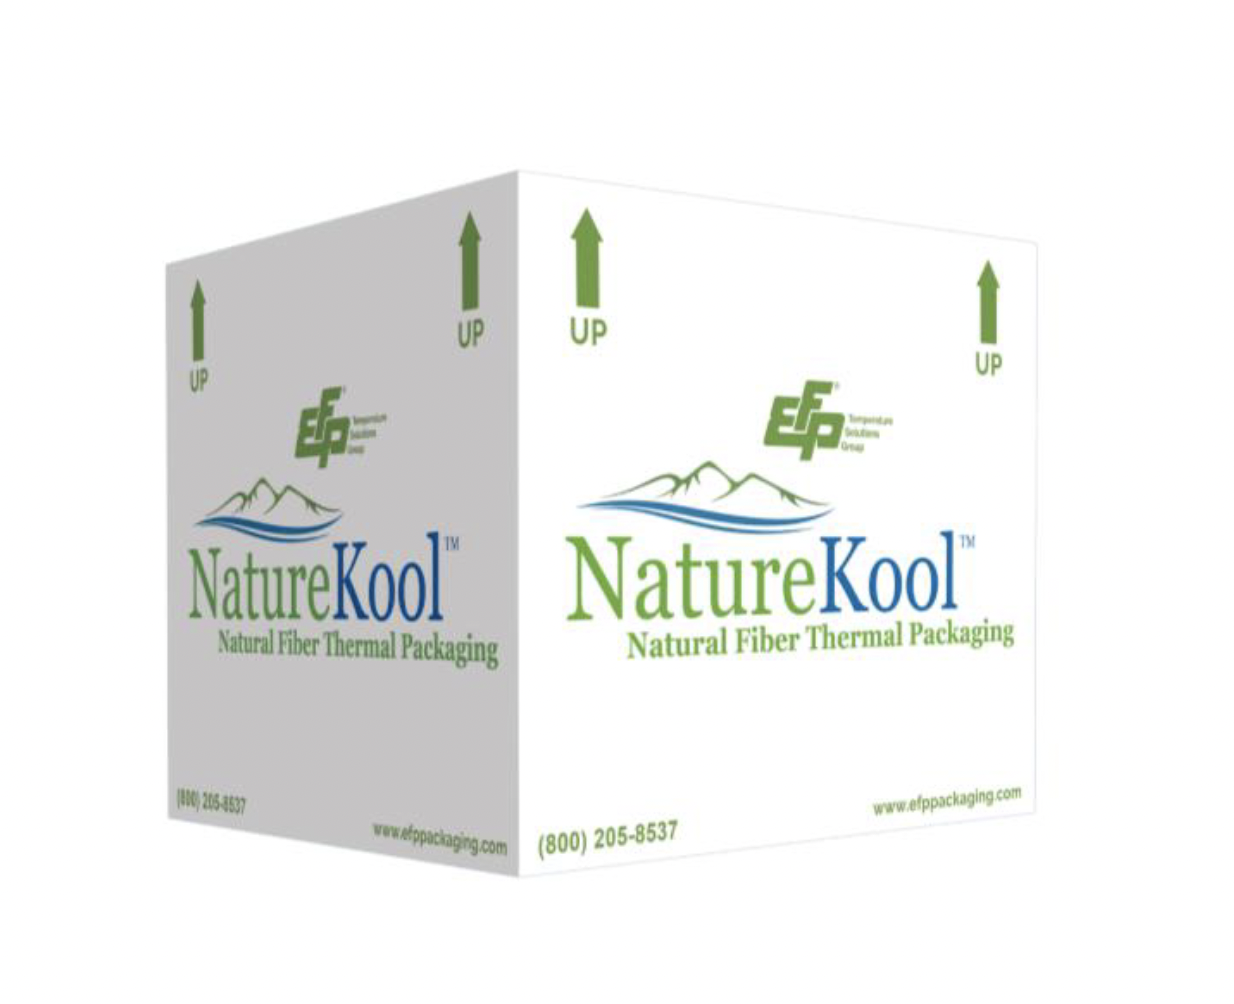 EFP Announces Acquisition of NatureKool, Inc.